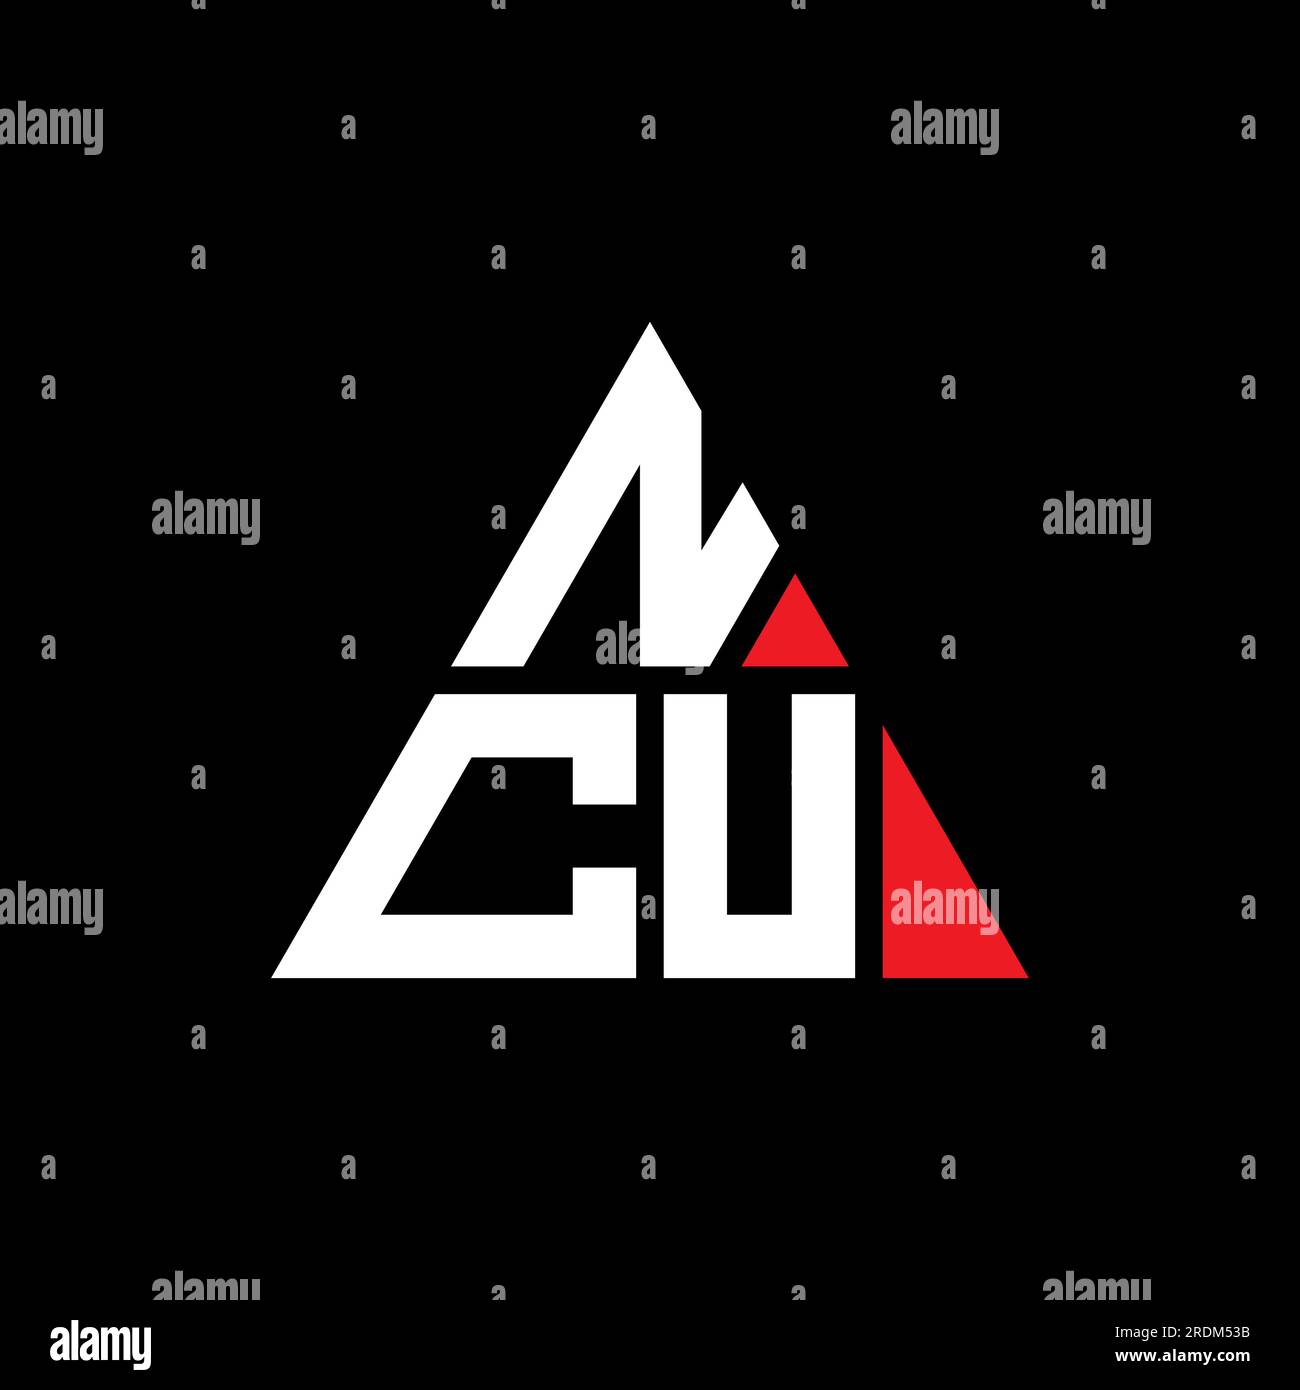 Ncu tech logo hi-res stock photography and images - Alamy